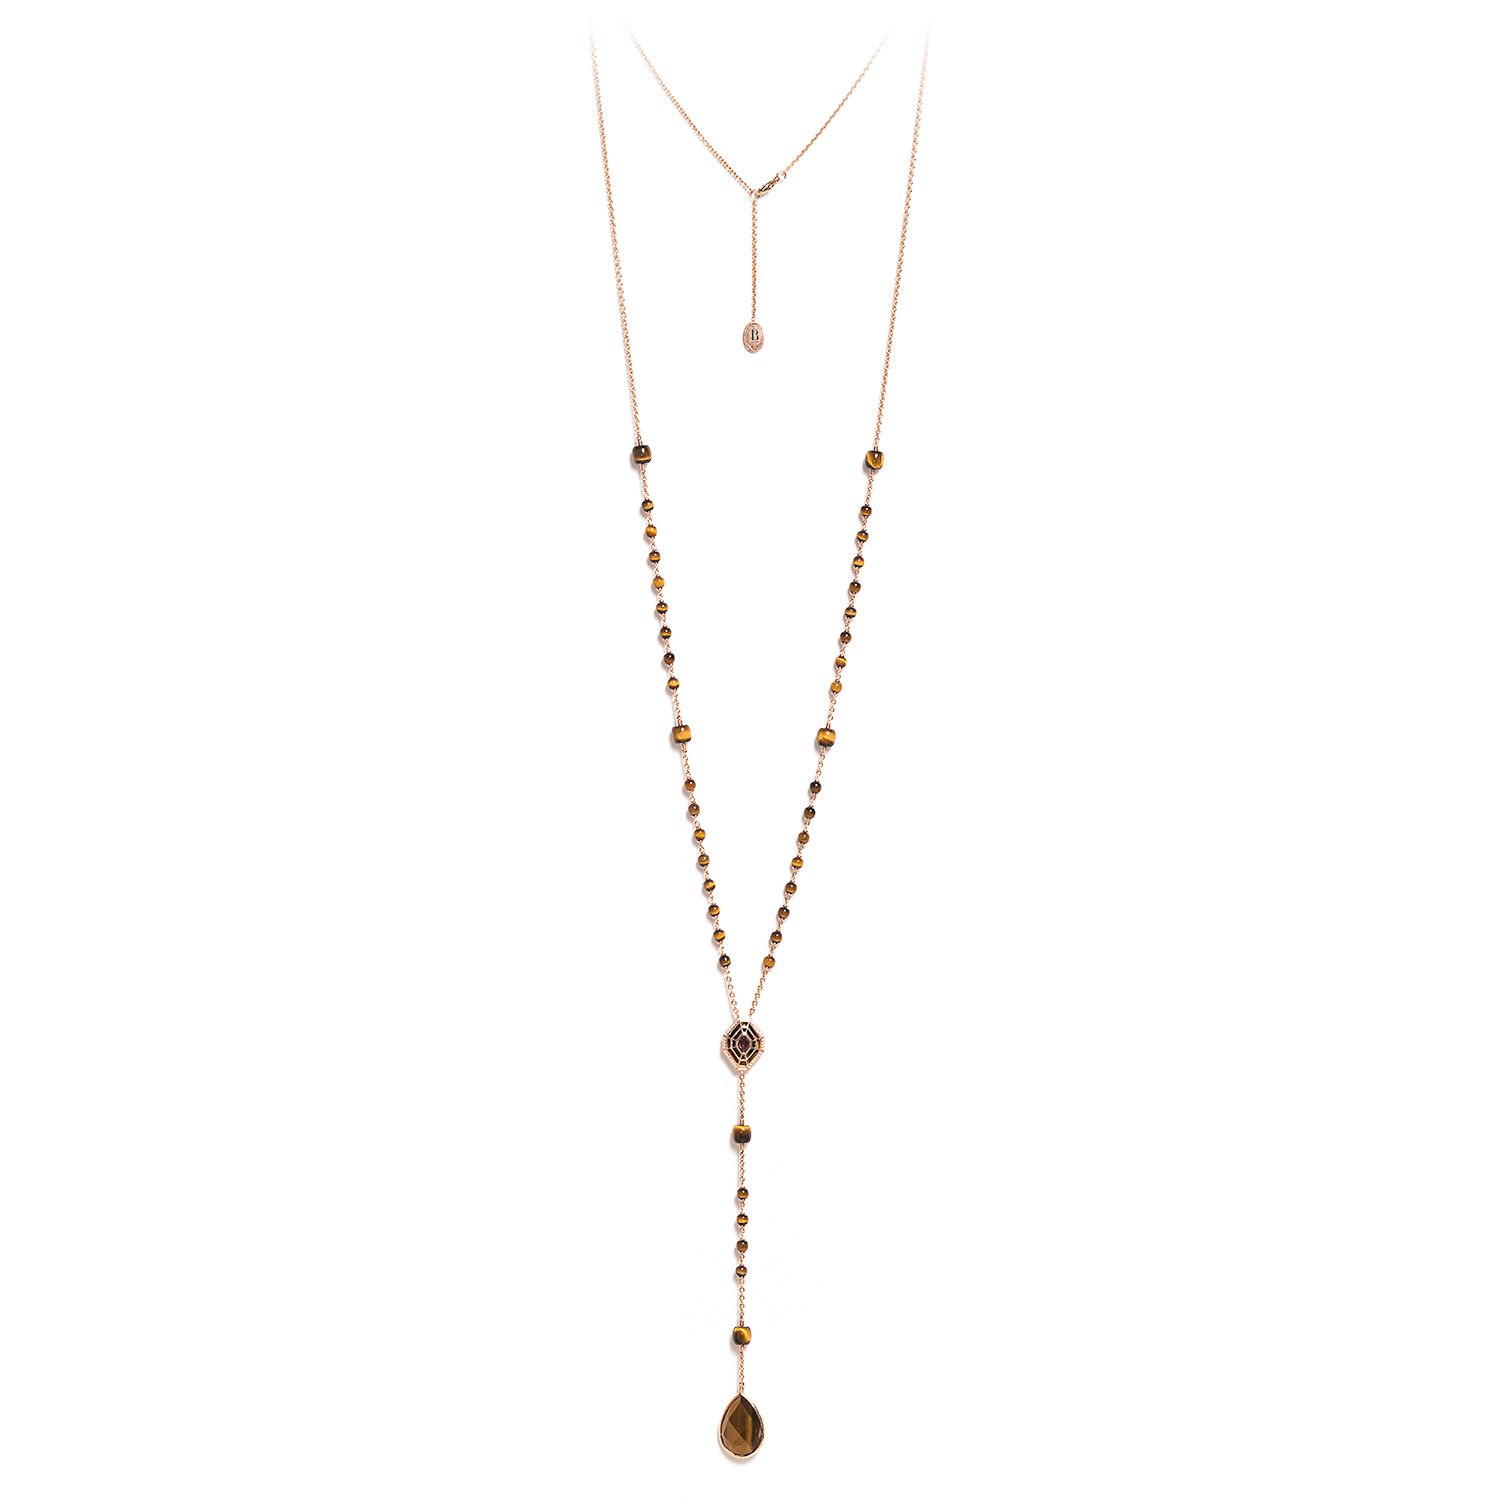 benedicte-de-boysson-marquise-rosemary-style-sautoir-necklace-collection